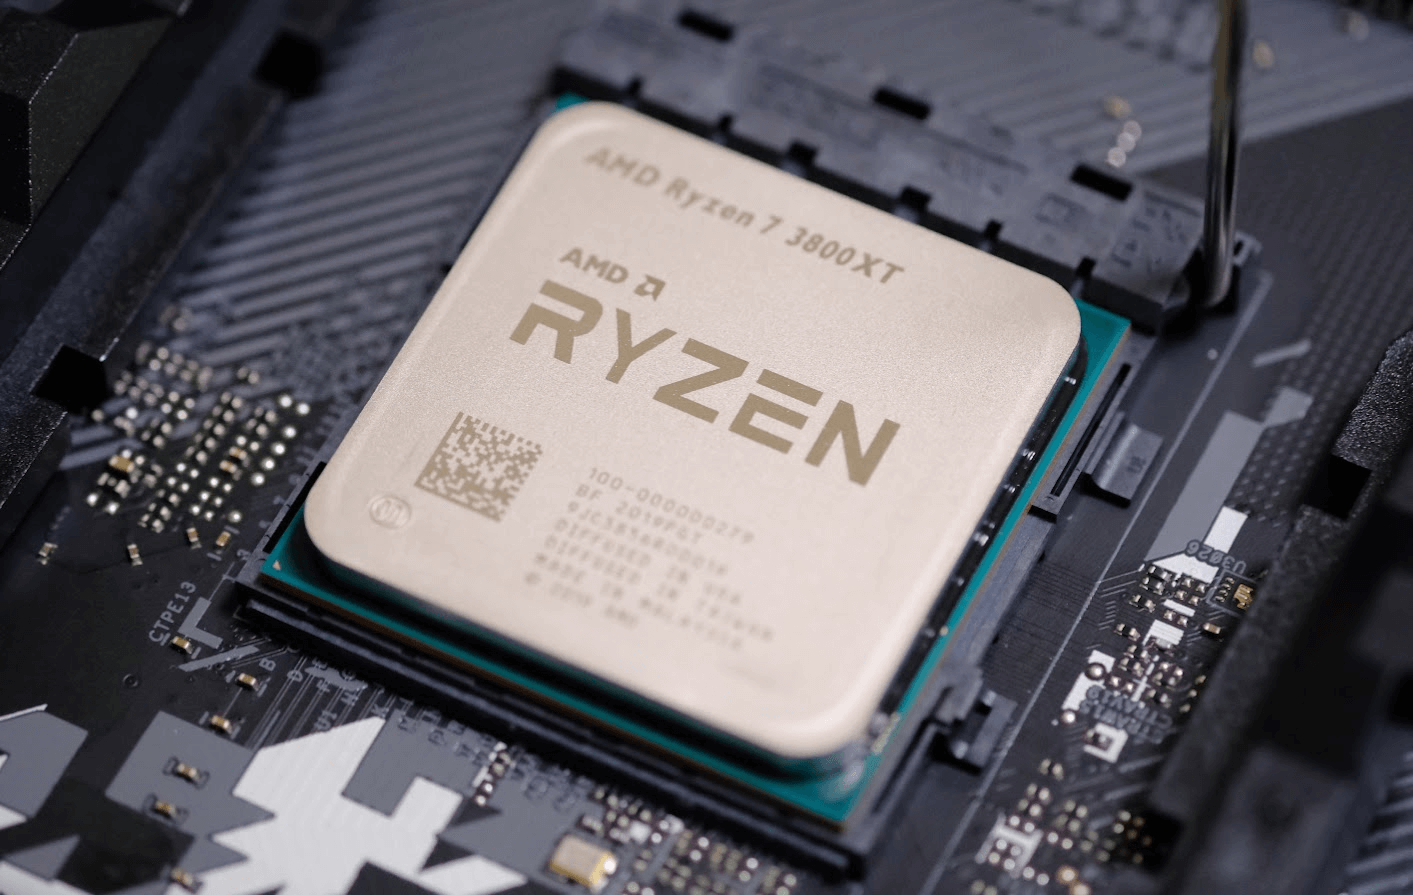 AMD Ryzen 9 5950X」CPU性能を Arnoldで徹底検証！ - AMD爆速ラボ